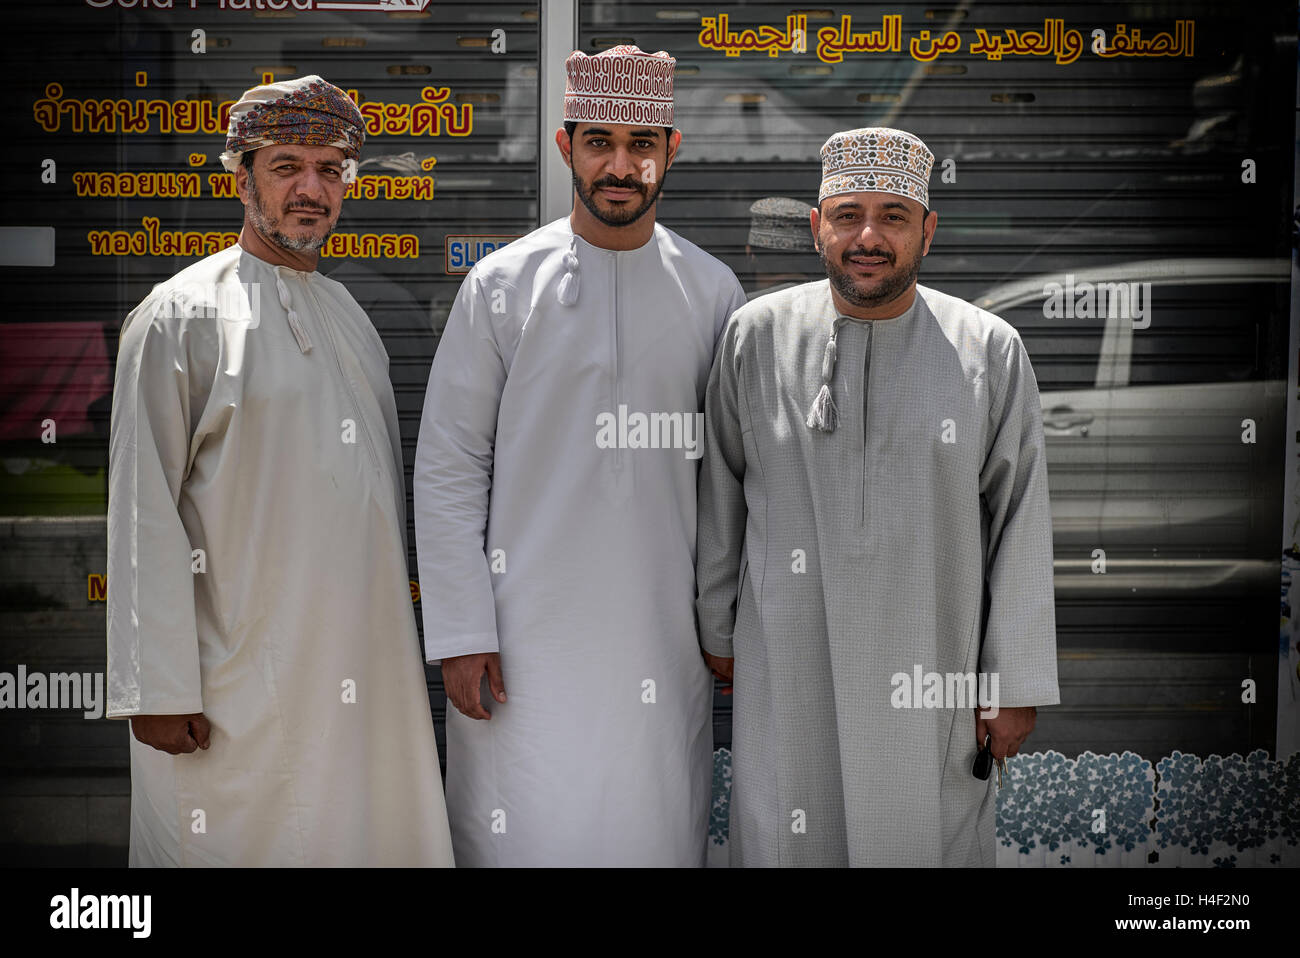 Omani people. Three men from Oman in traditional dress known as dishdasha Stock Photo